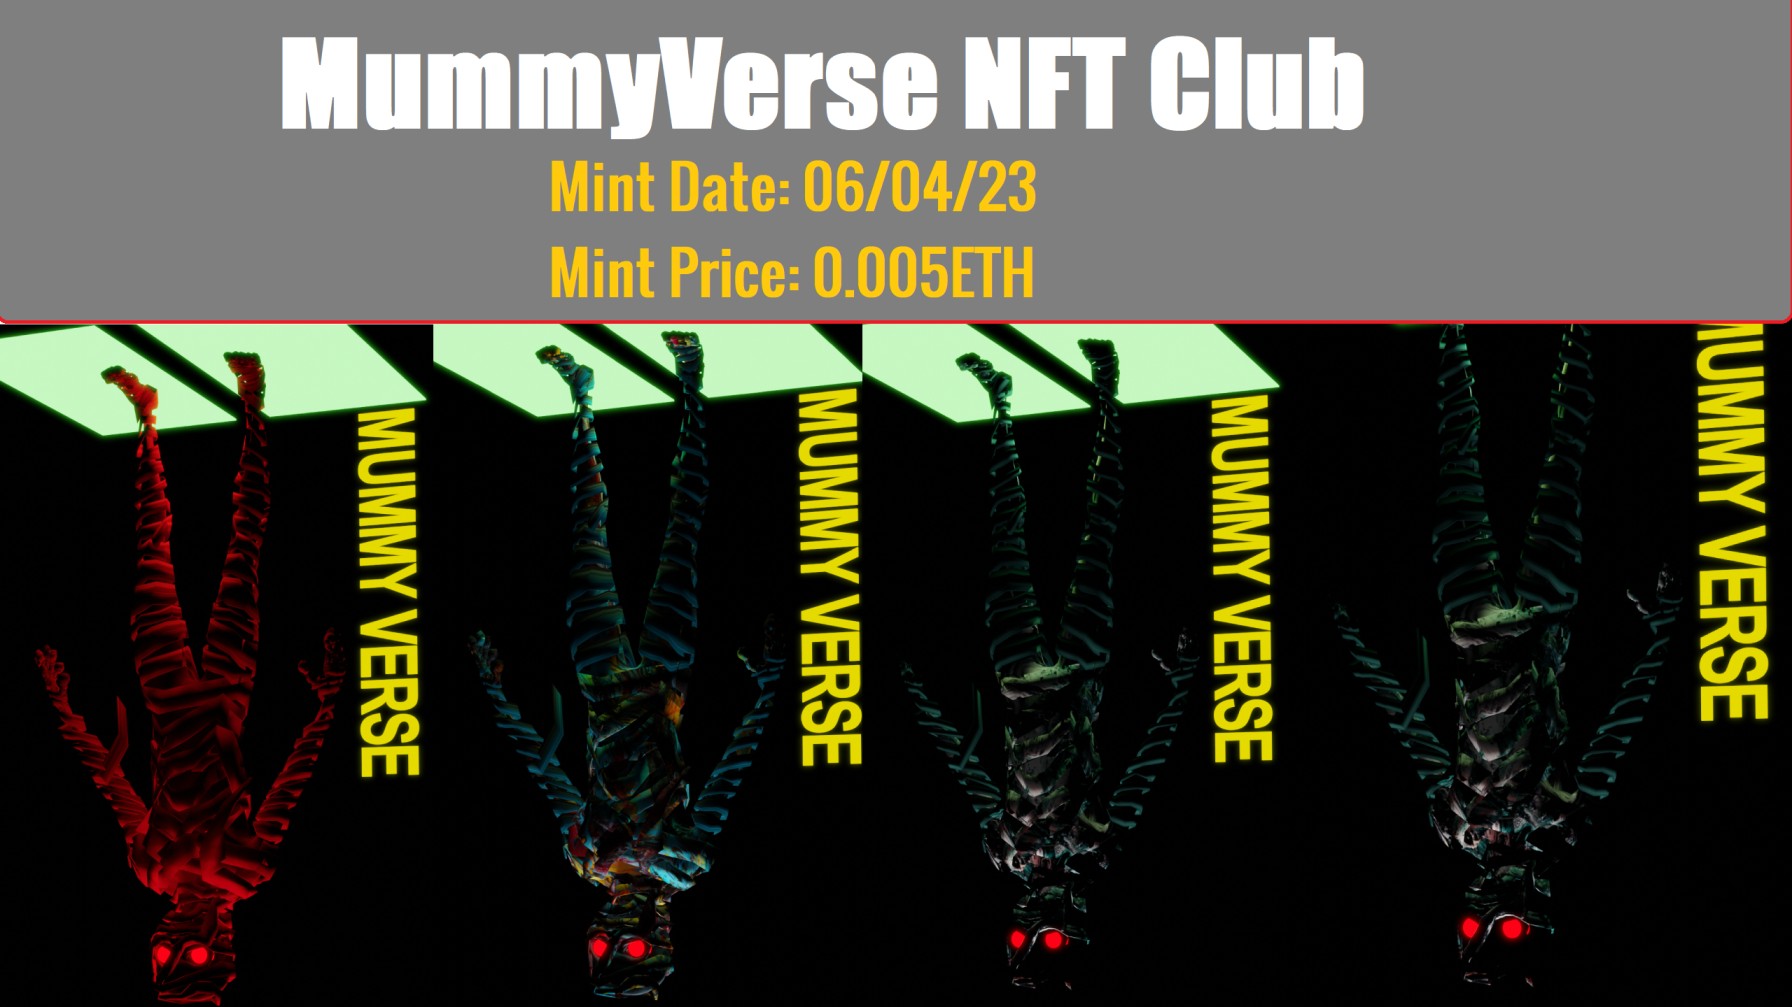 NFT drop preview for Mummyverse NFT Club